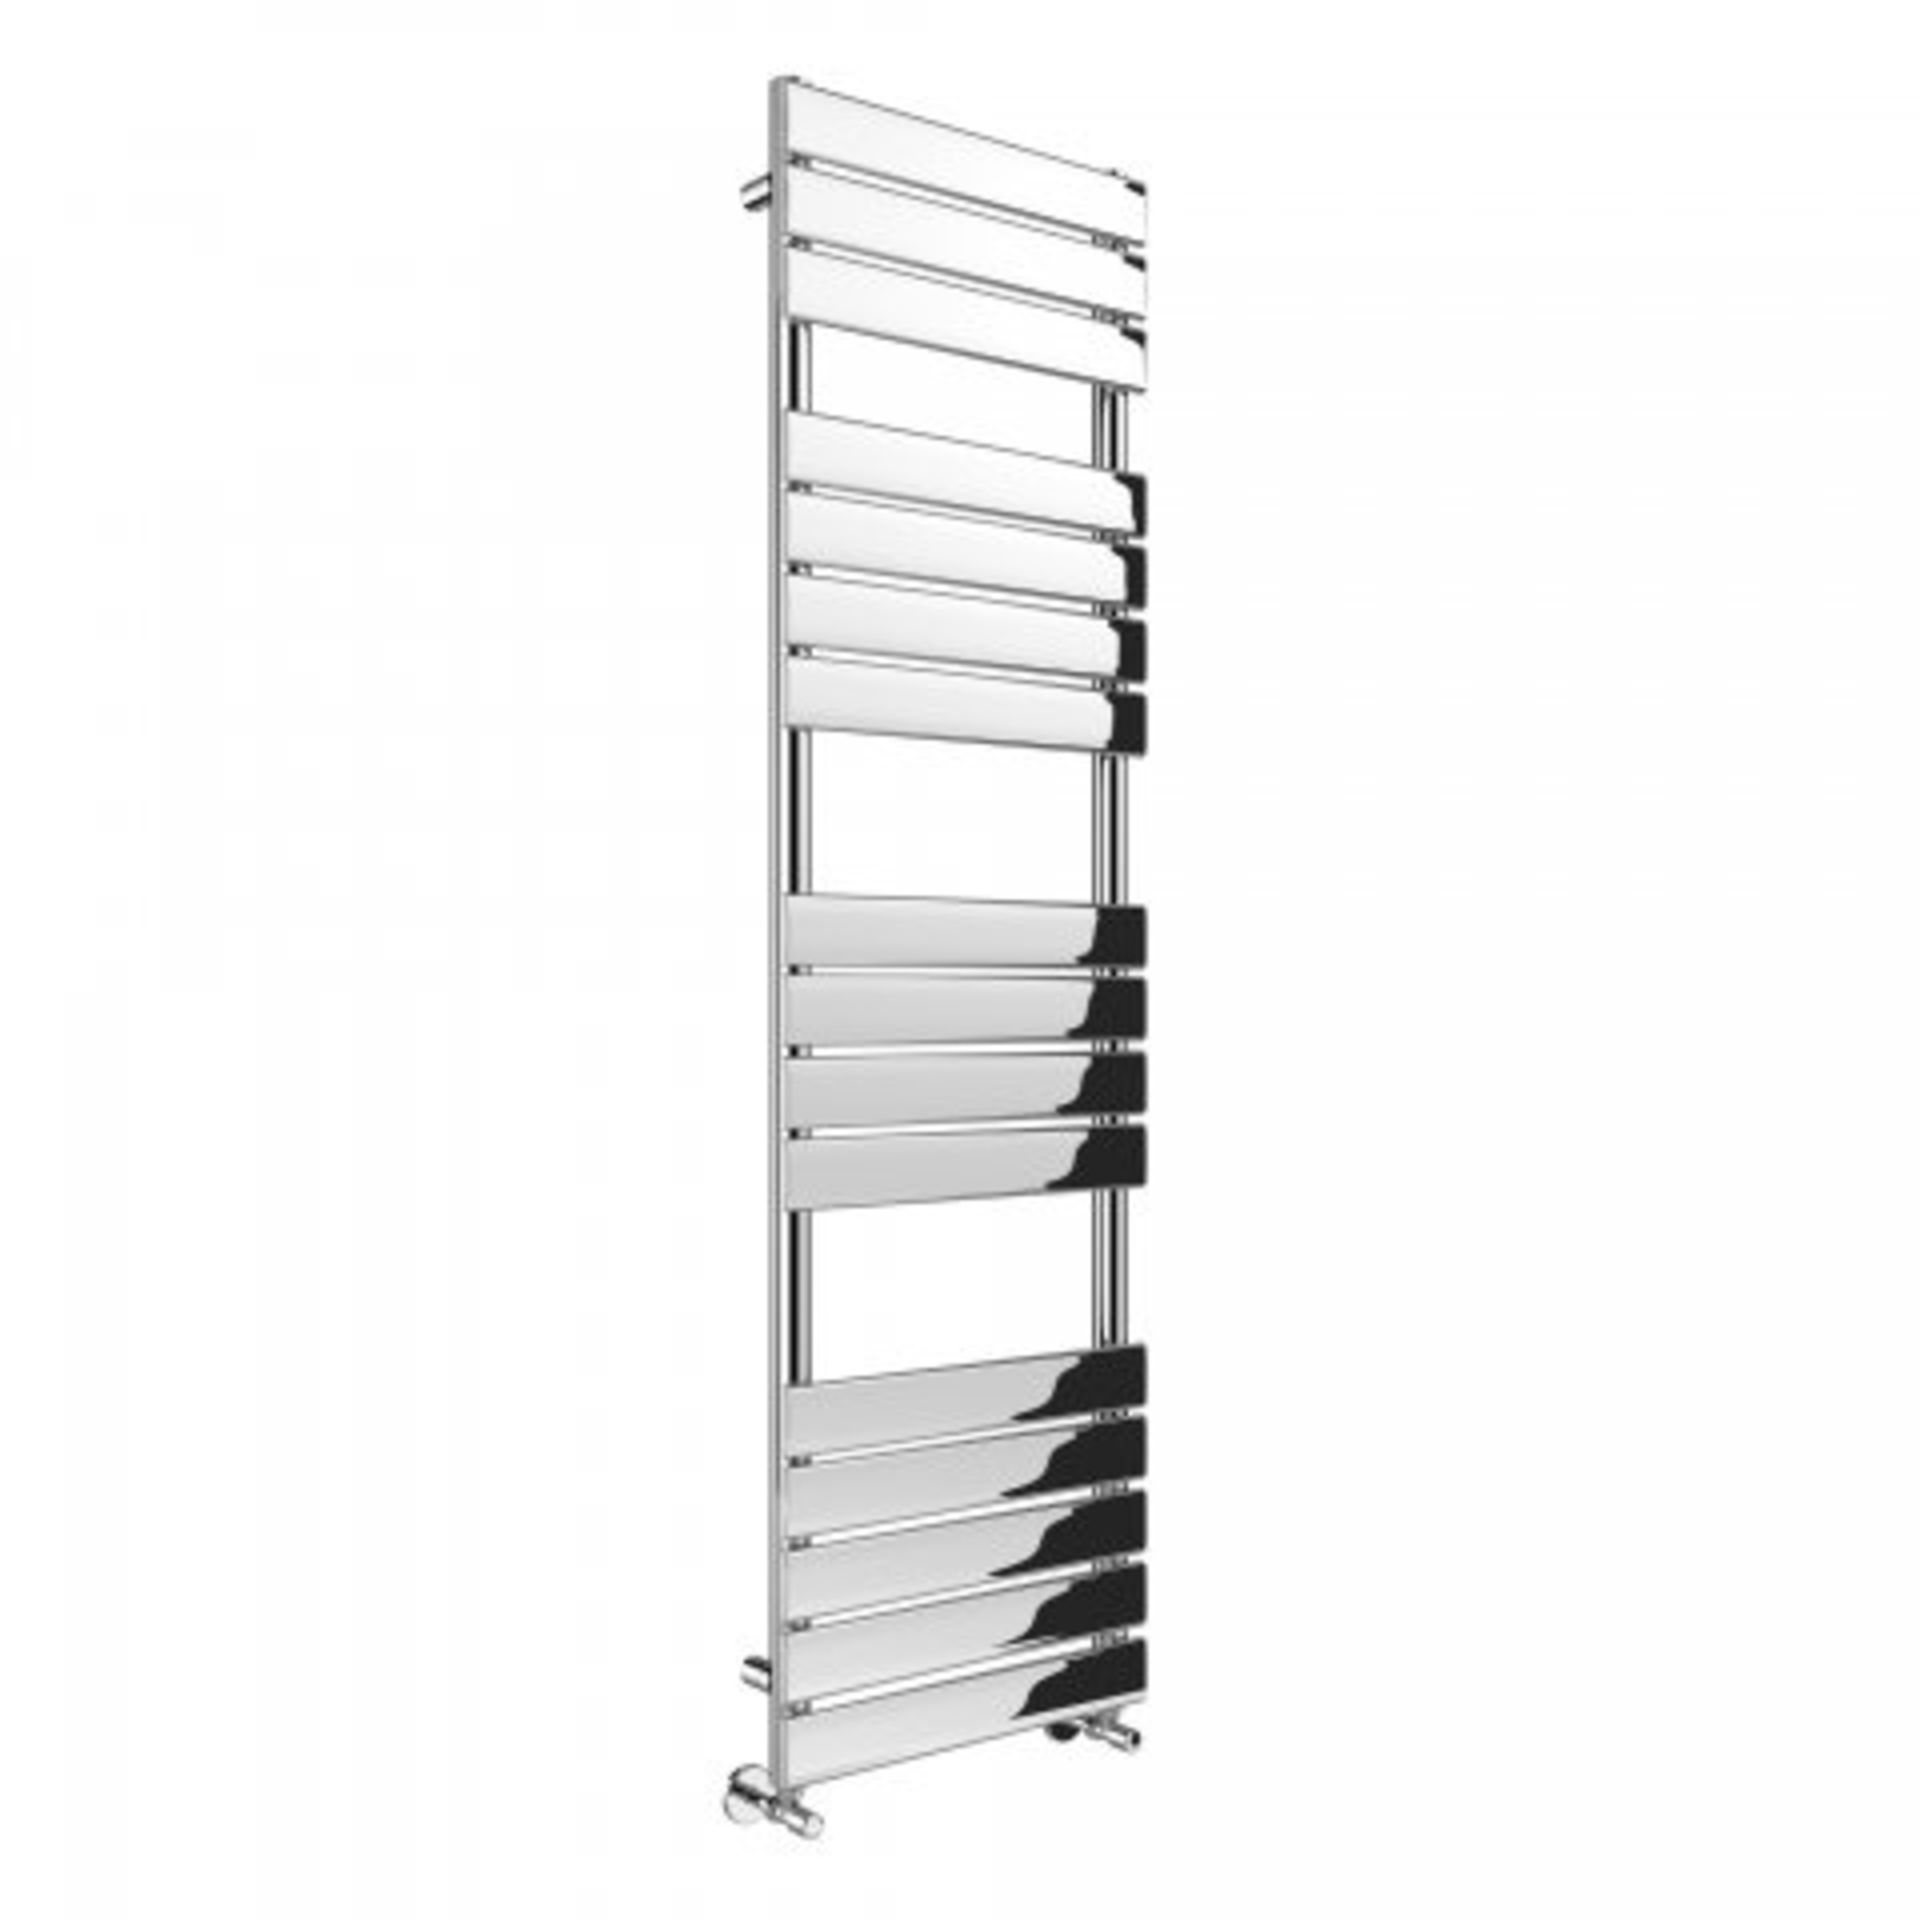 (SKU378) 1600x450mm Chrome Flat Panel Ladder Towel Radiator - Francis Range. RRP £436.99. - Image 2 of 5